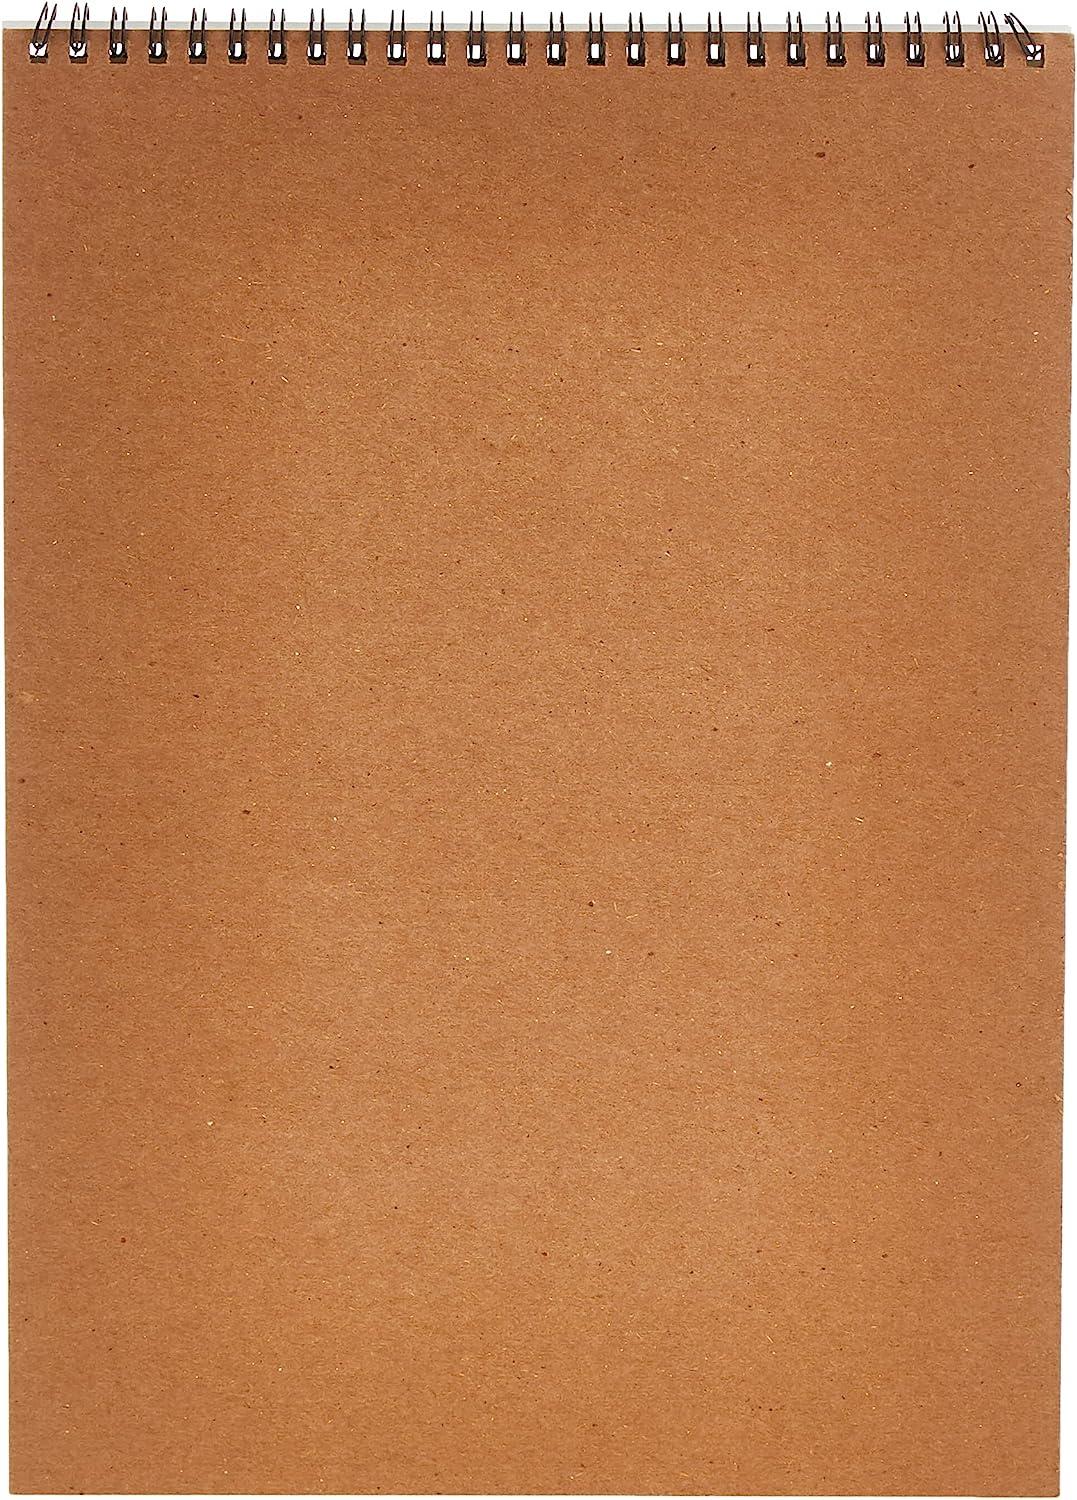 Strathmore Medium Drawing Spiral Paper Pad 12X18- 24 Sheets